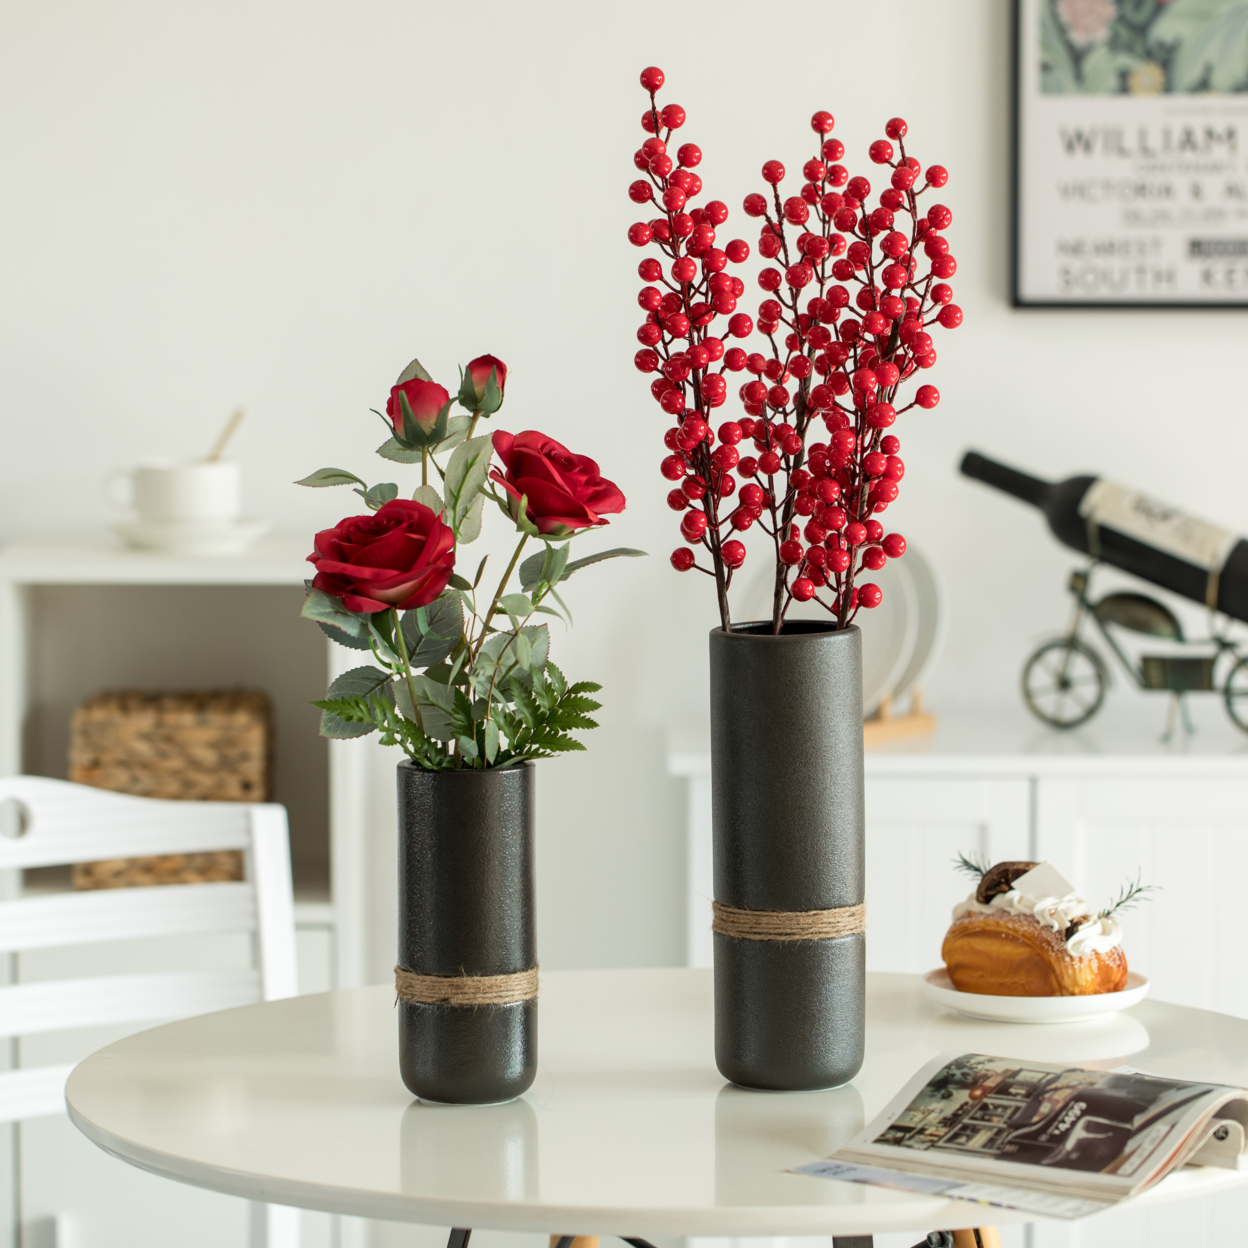 Decorative Modern Ceramic Cylinder Shape Table Vase Flower Holder With Rope - Set Of 2 White